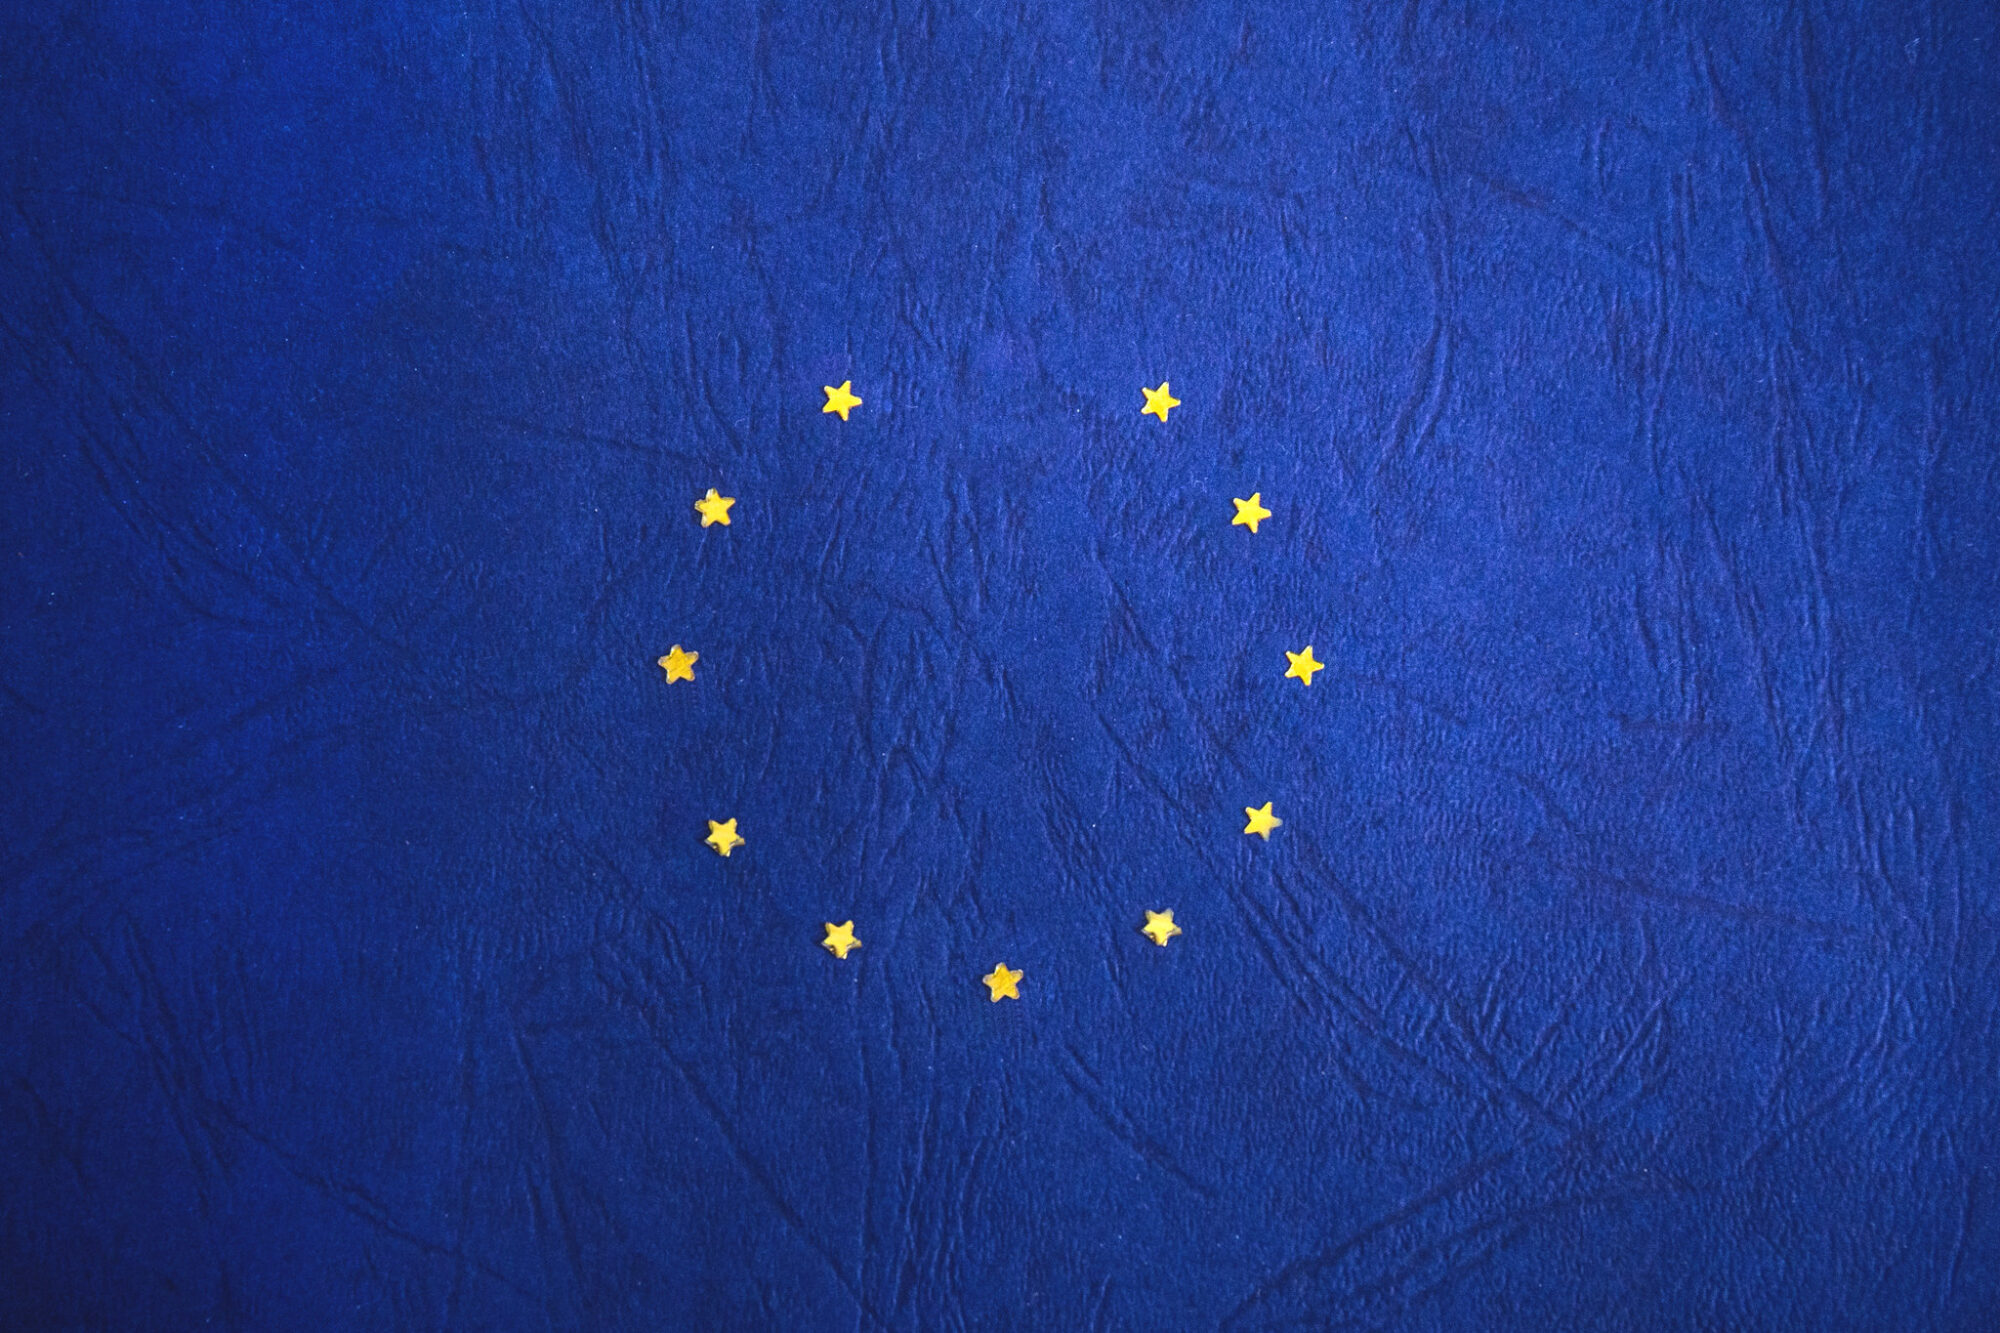 EU flag missing a star